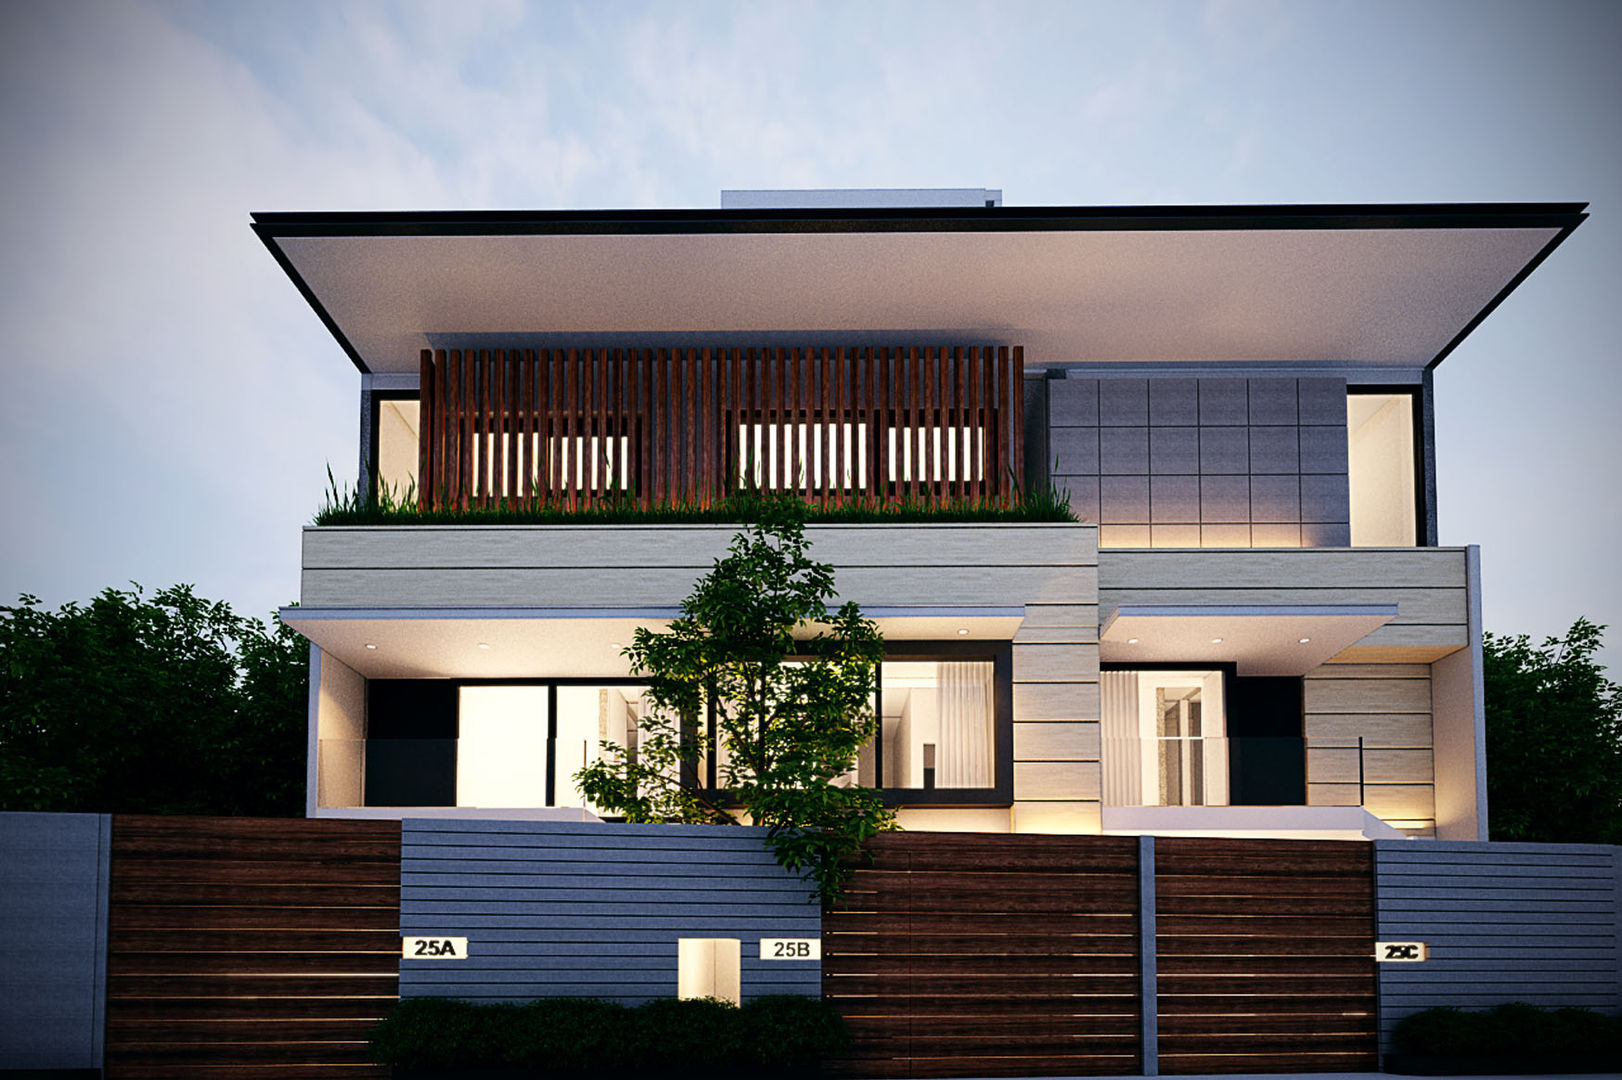 Teratai House, Arci Design Studio Arci Design Studio Modern houses